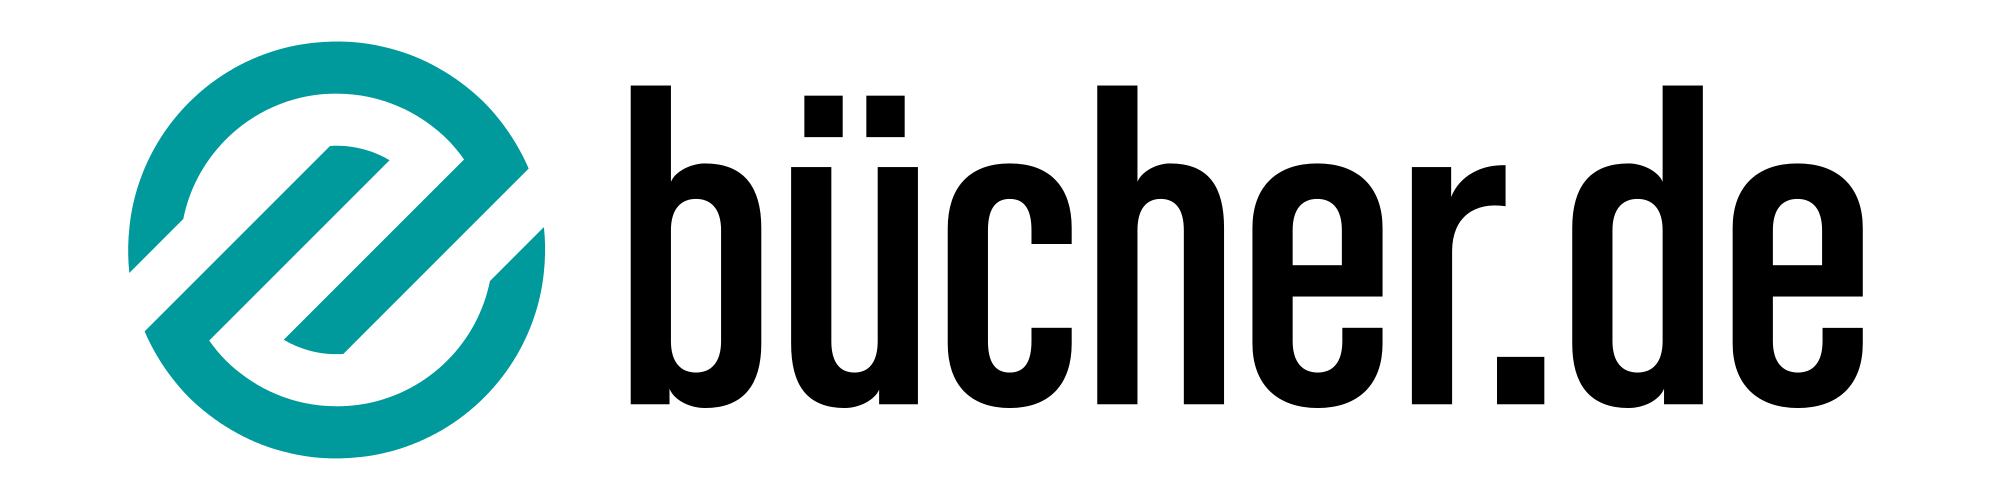 bücher.de logo